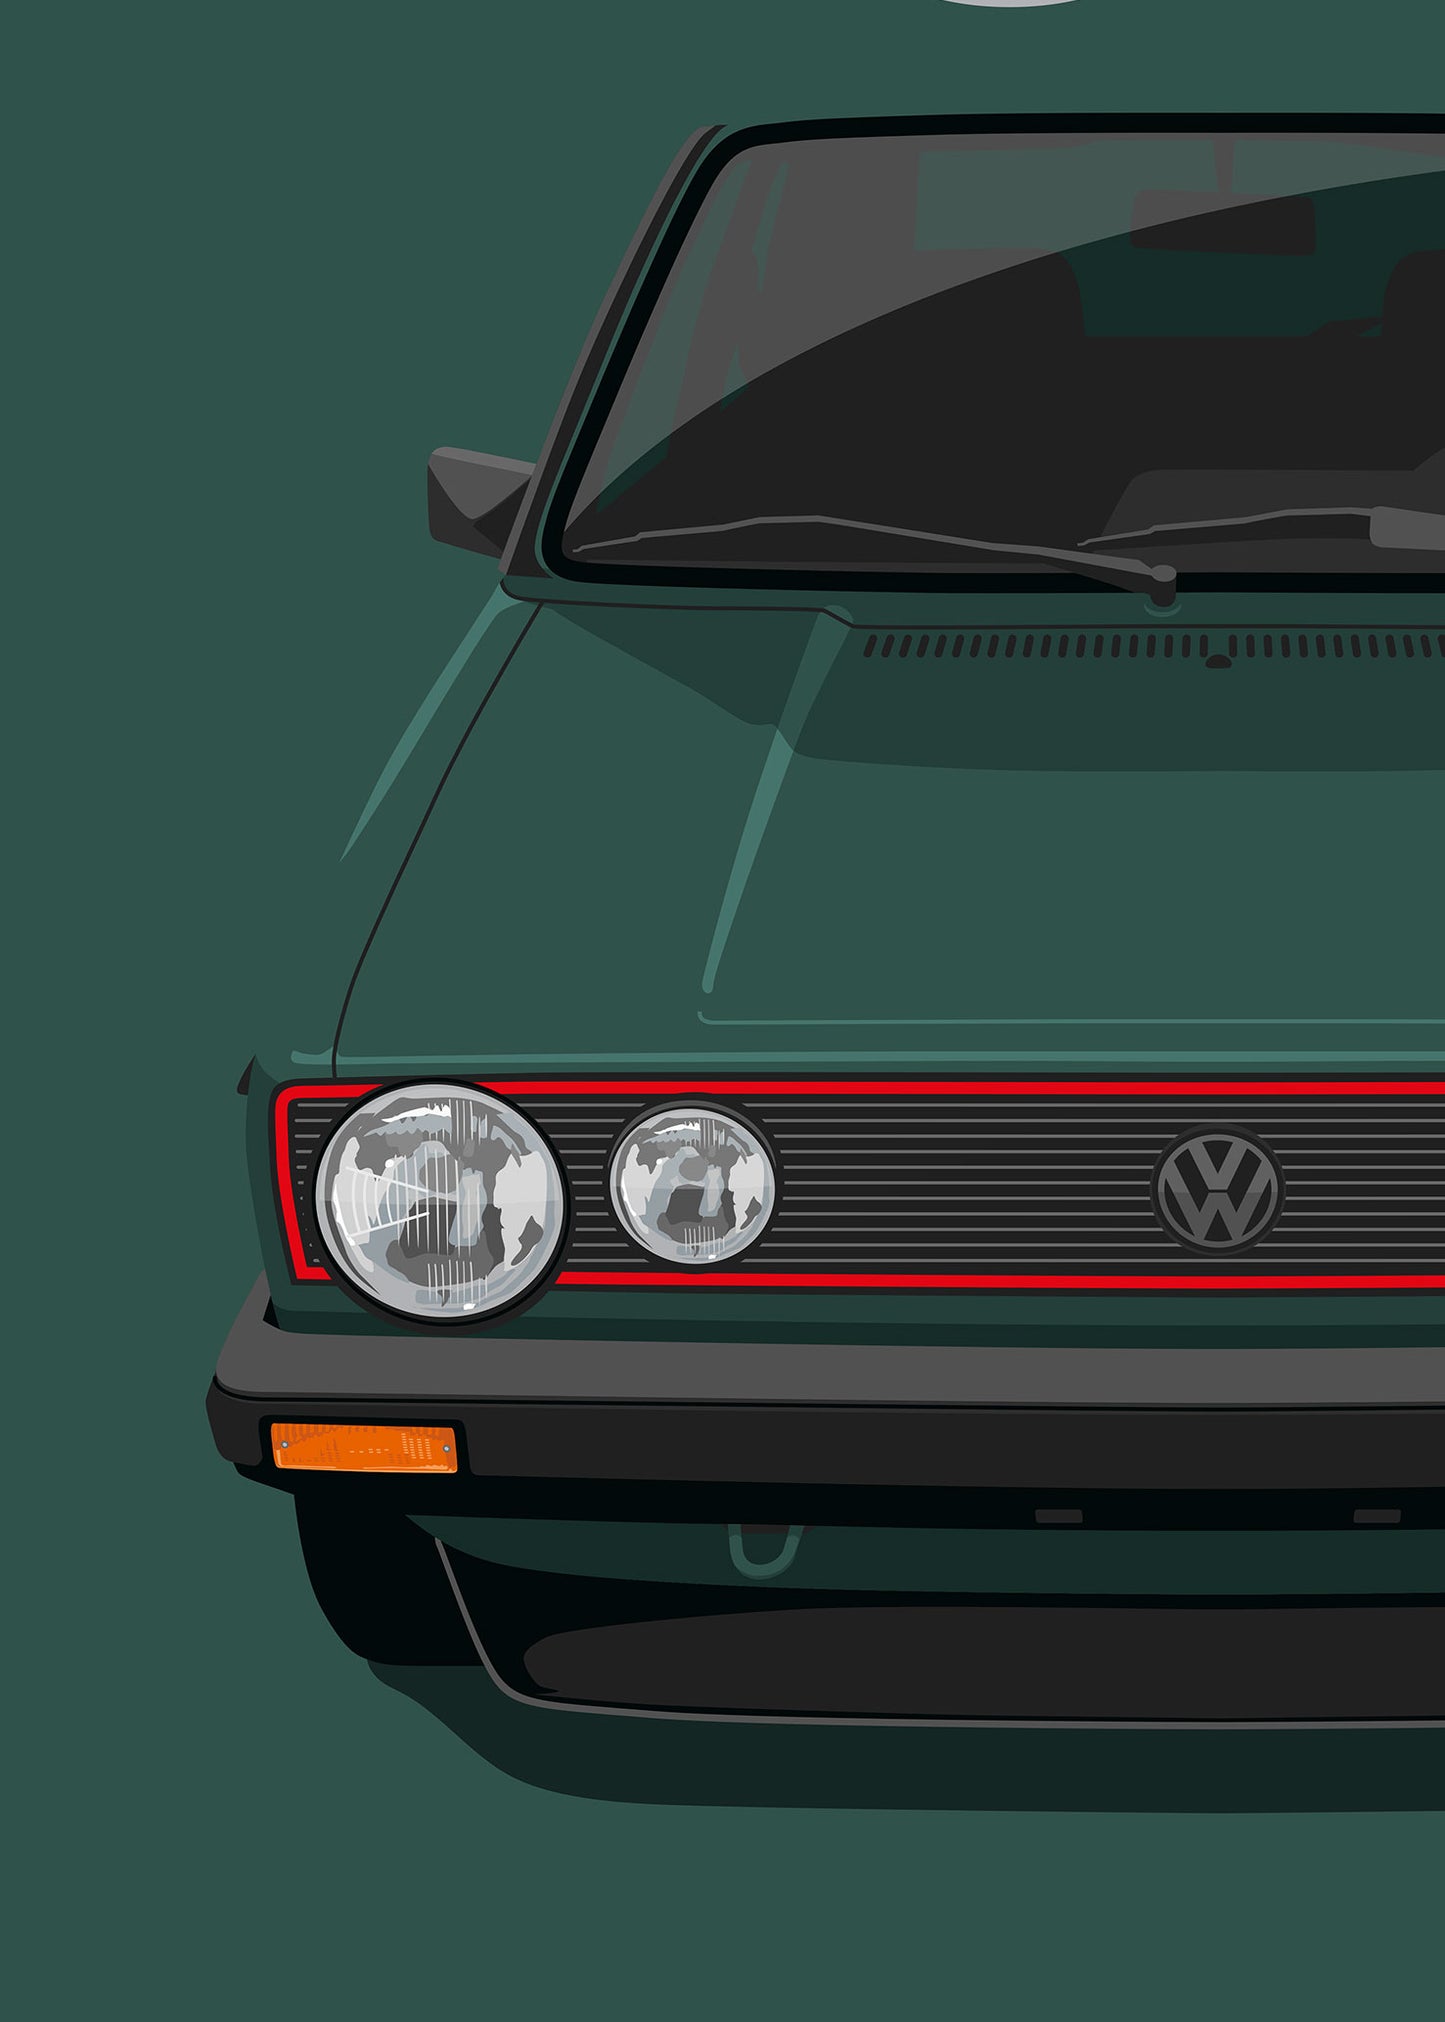 1983 Volkswagen Golf GTI (Mk1) - Lhasa Green - poster print